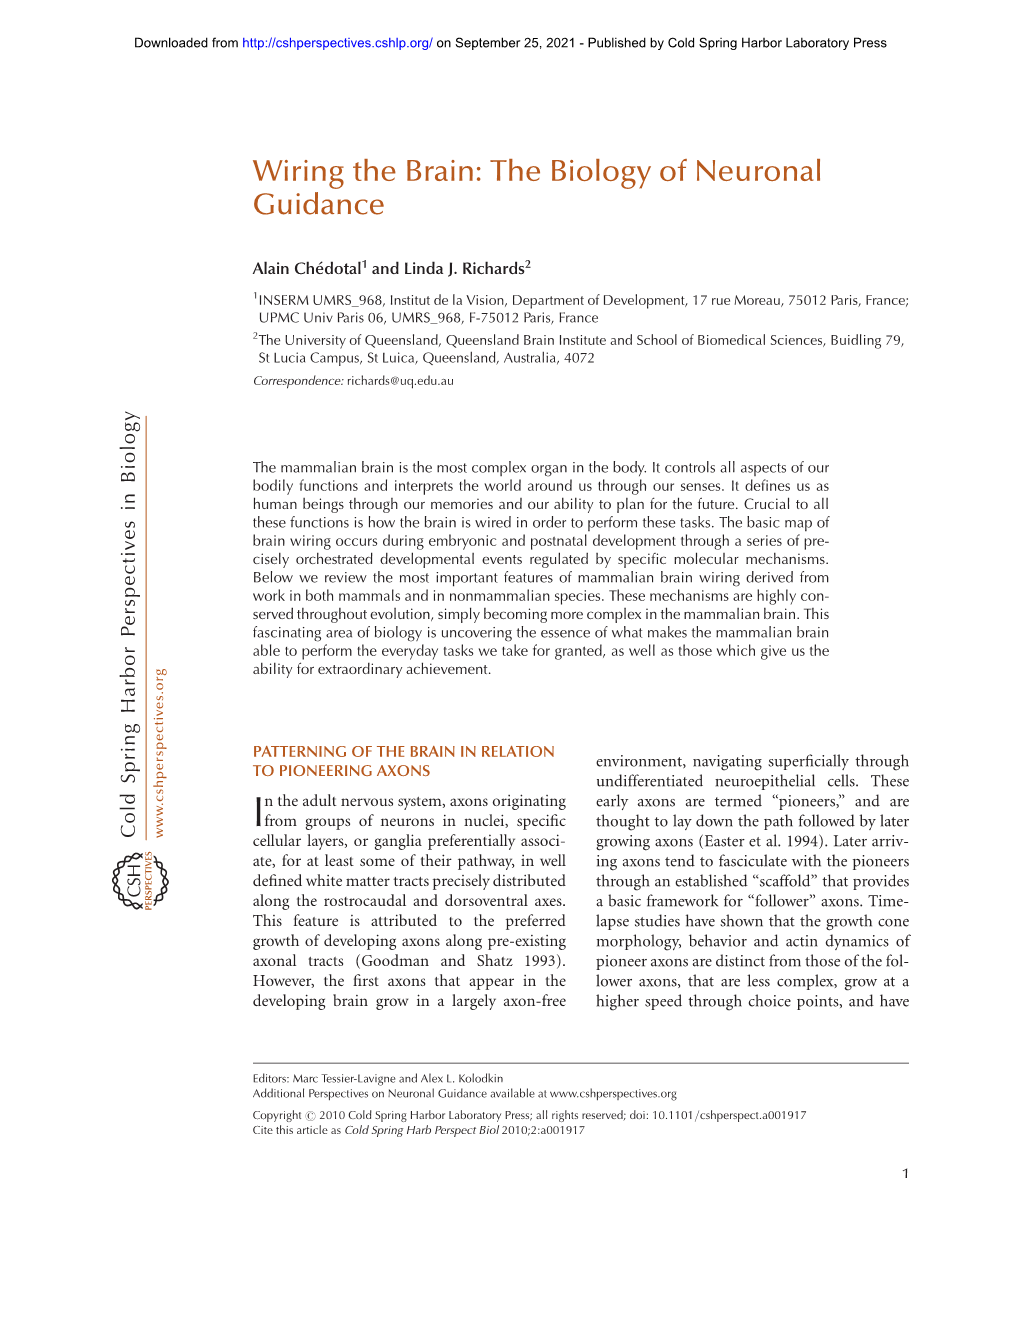 Wiring the Brain: the Biology of Neuronal Guidance